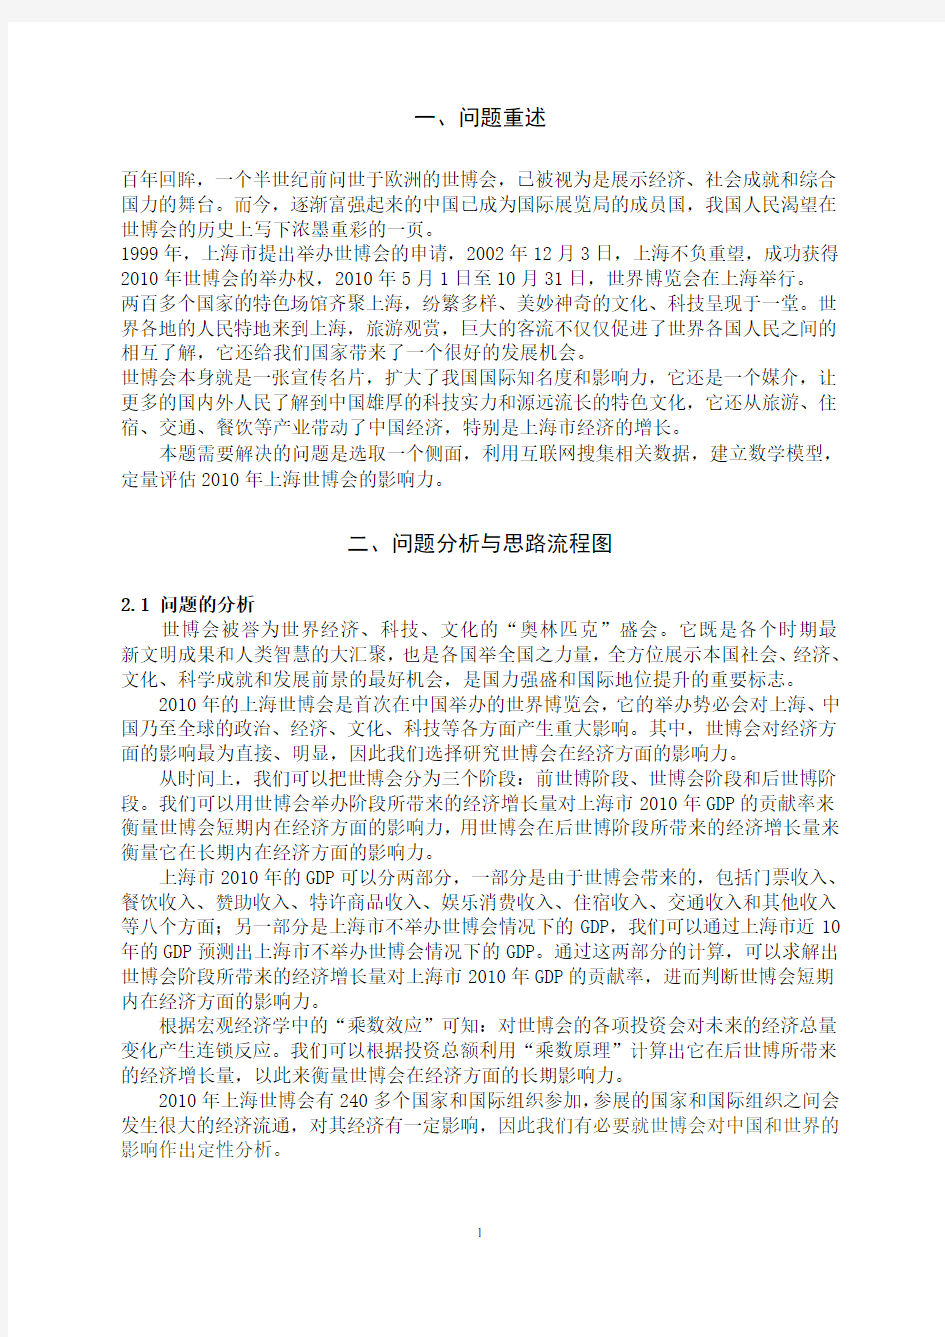 B题 2010年上海世博会影响力的定量评估